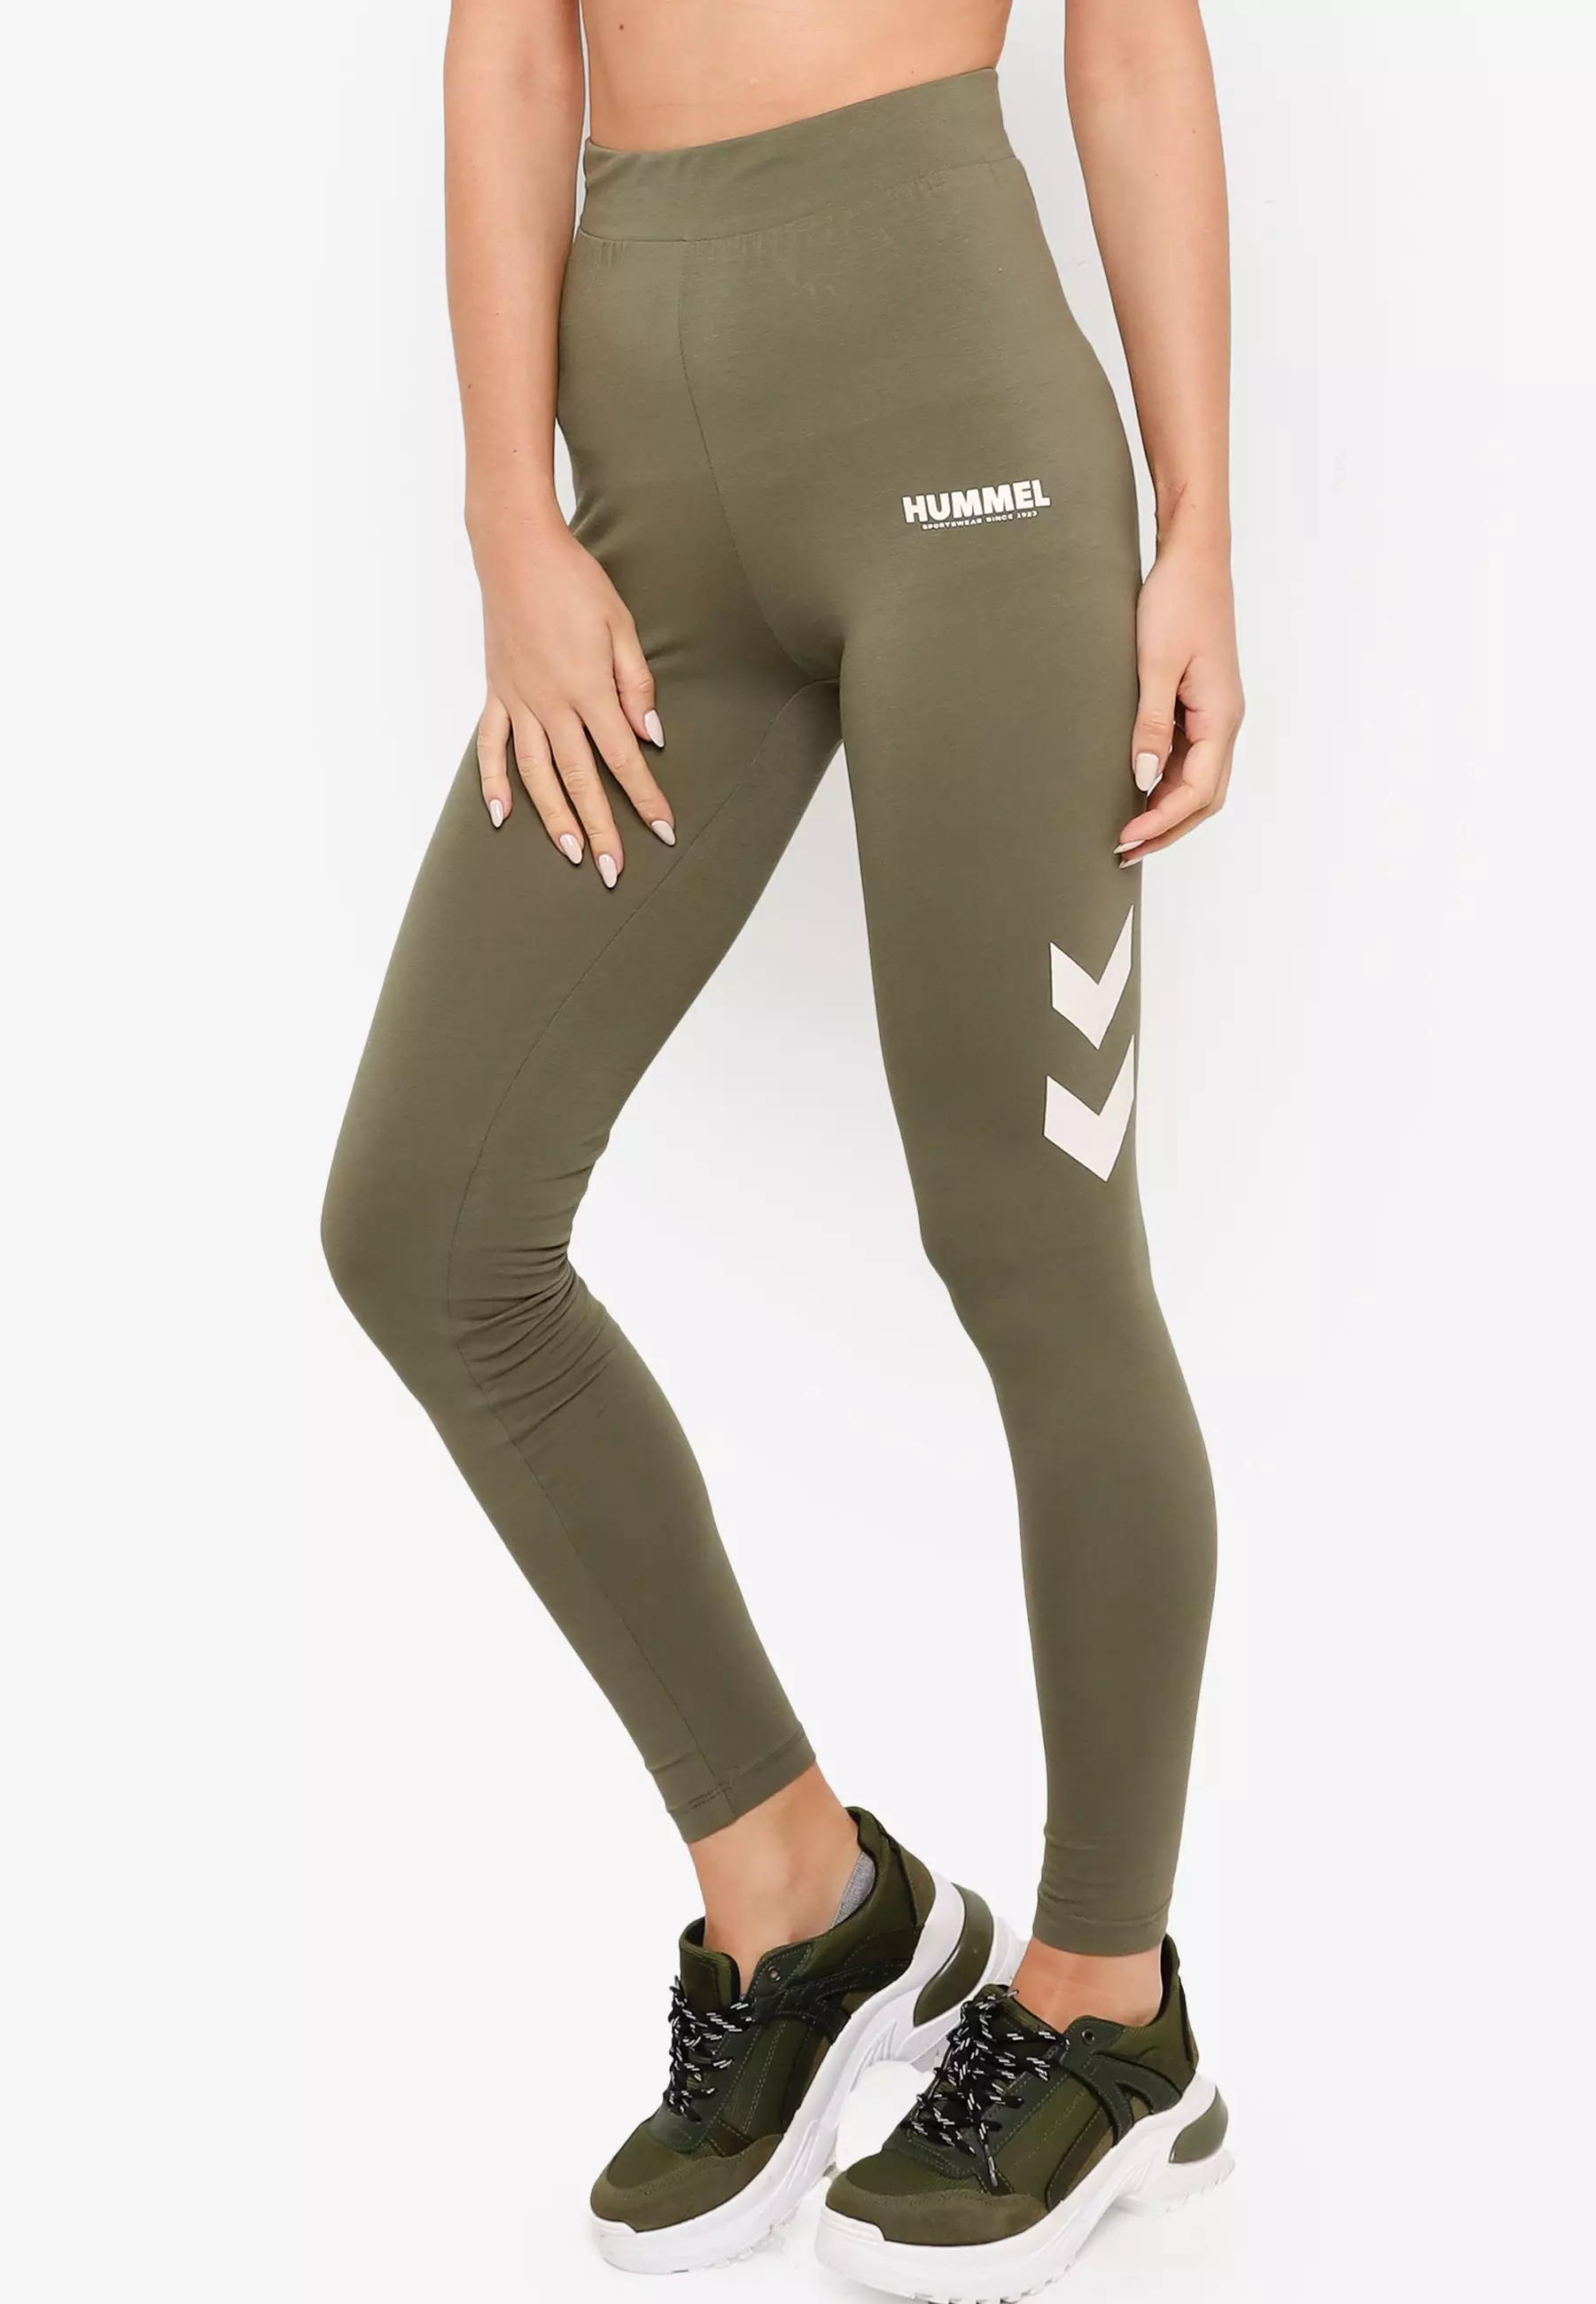 Legging top woman Hummel TIF - Hummel - Brands - Lifestyle